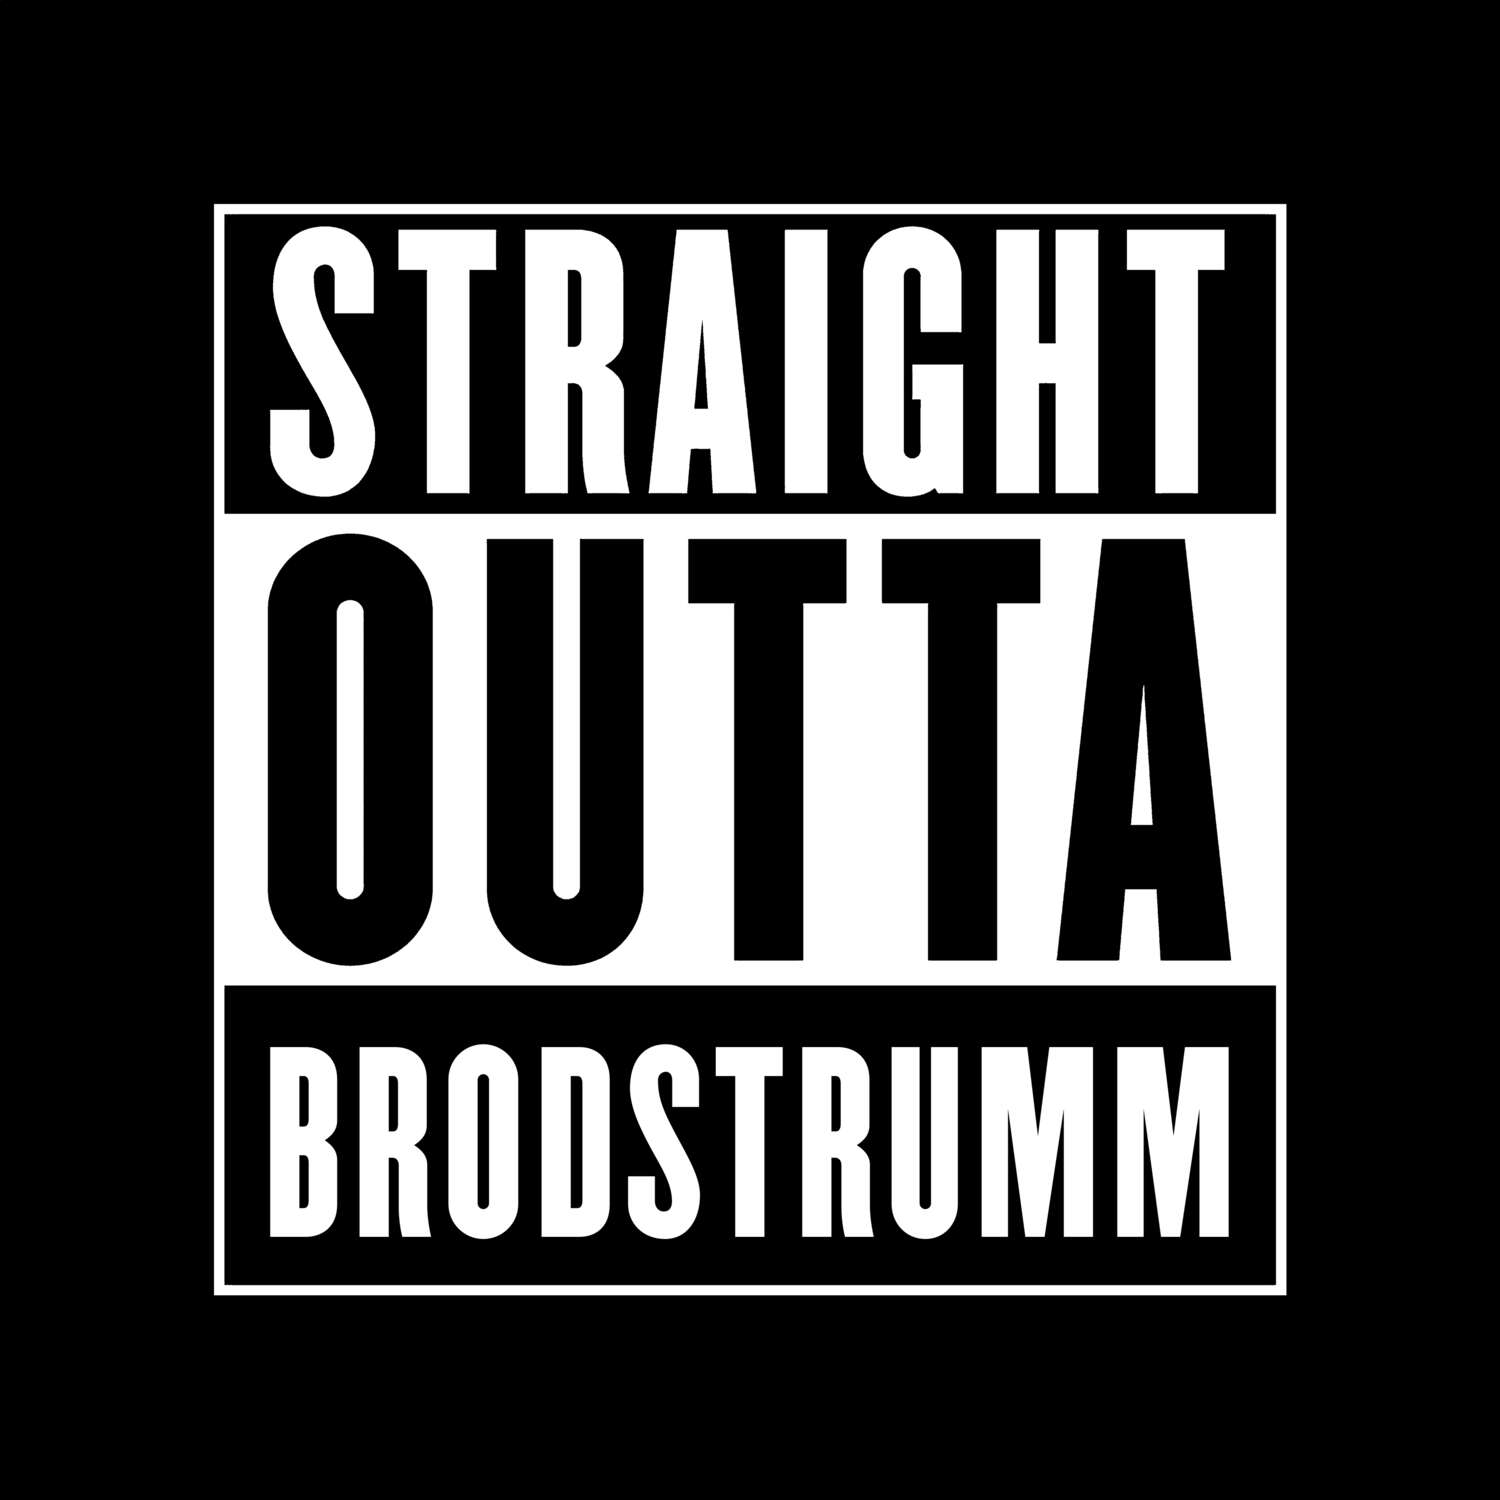 Brodstrumm T-Shirt »Straight Outta«